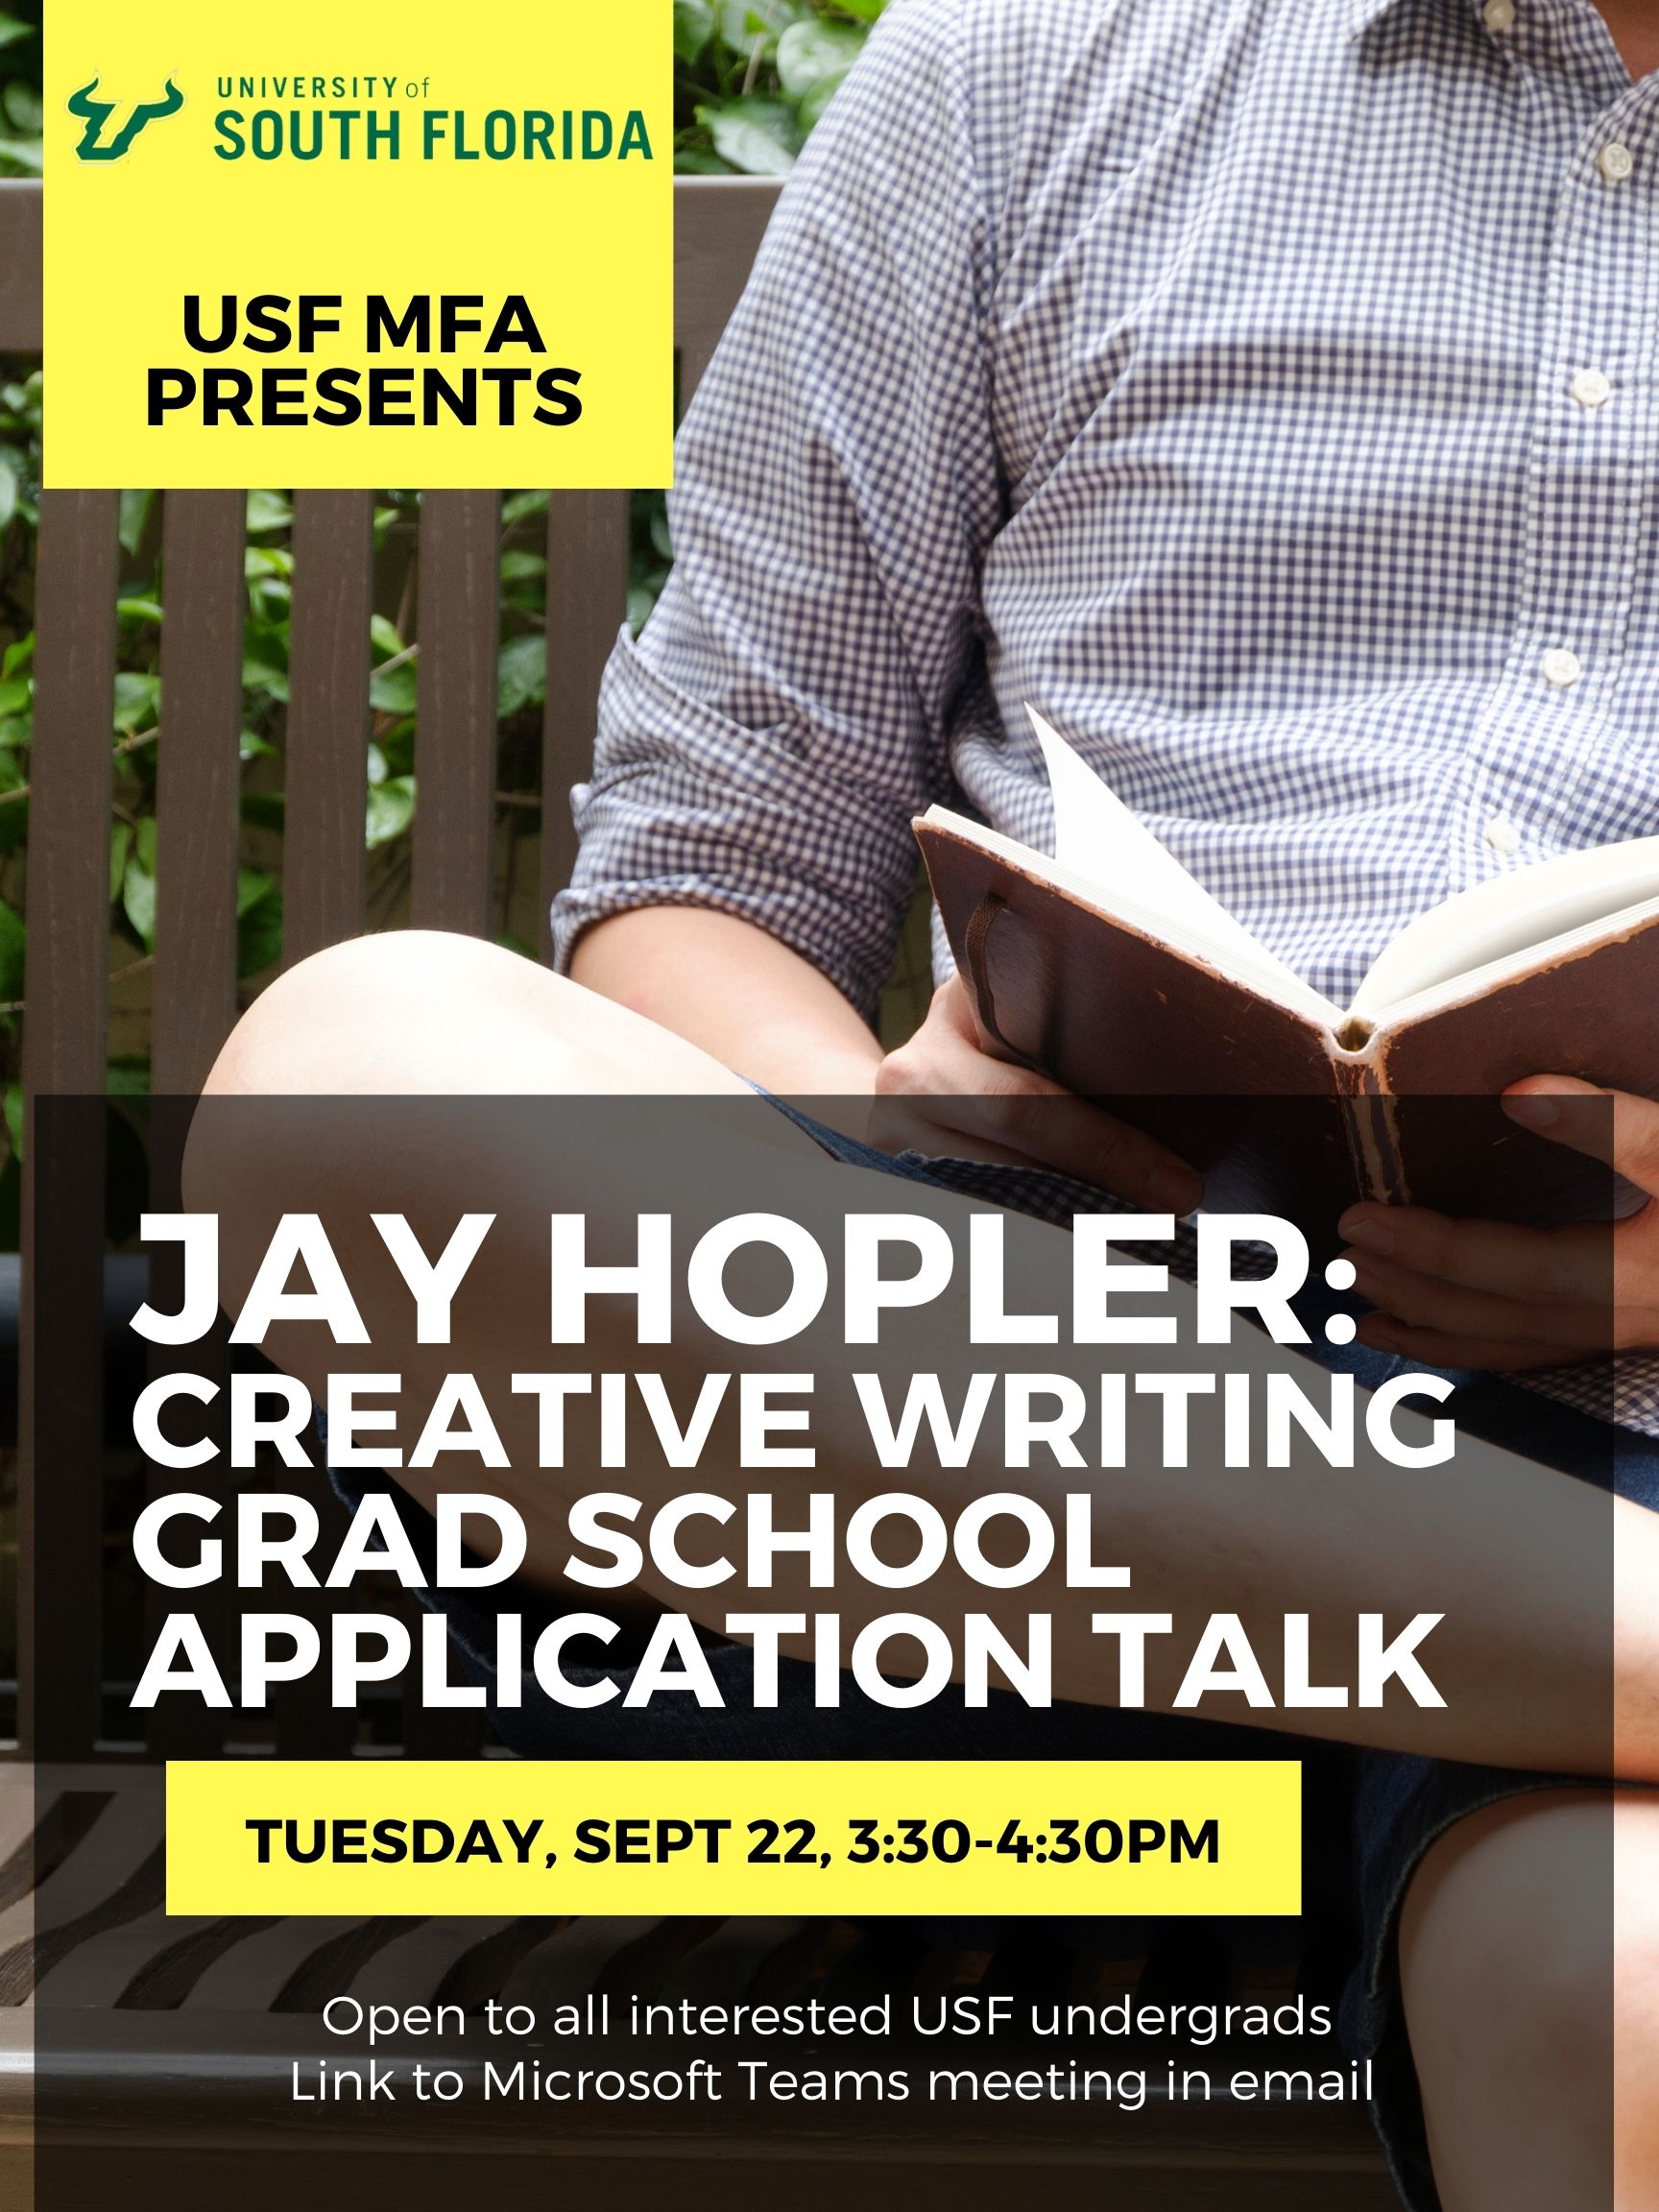 Flyer for creative writing graduate school application talk